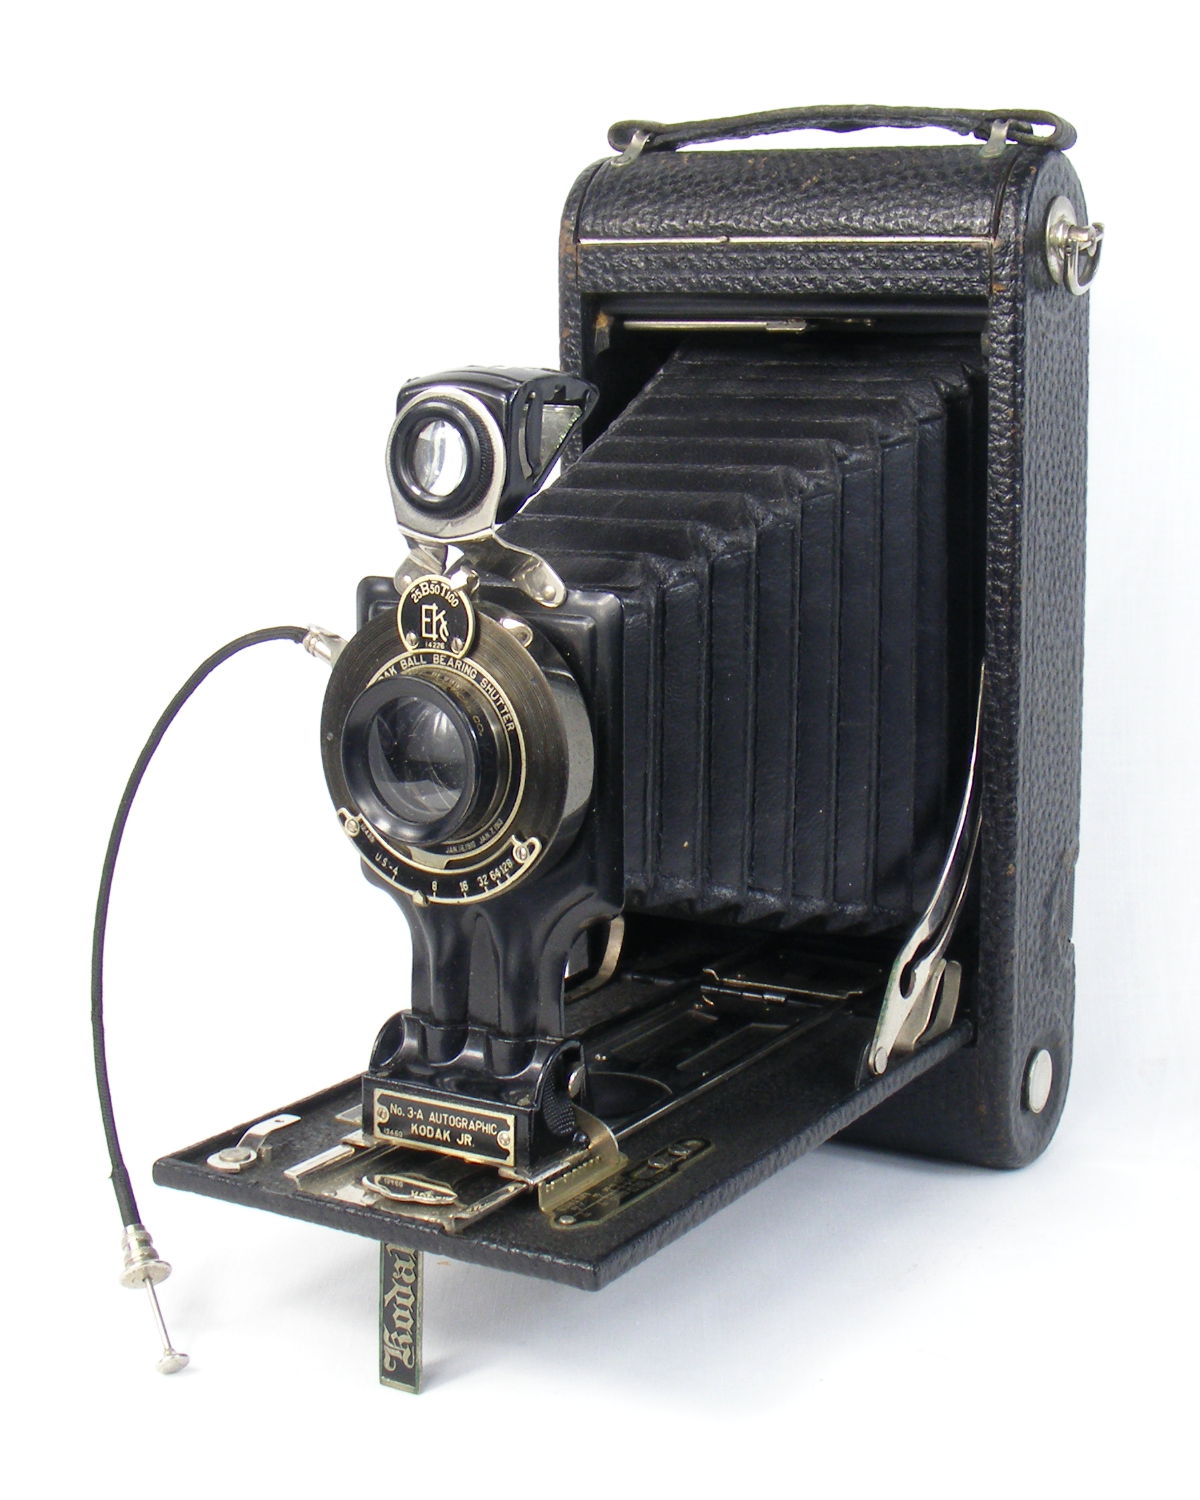 Image of No 3A Autographic Kodak Junior camera